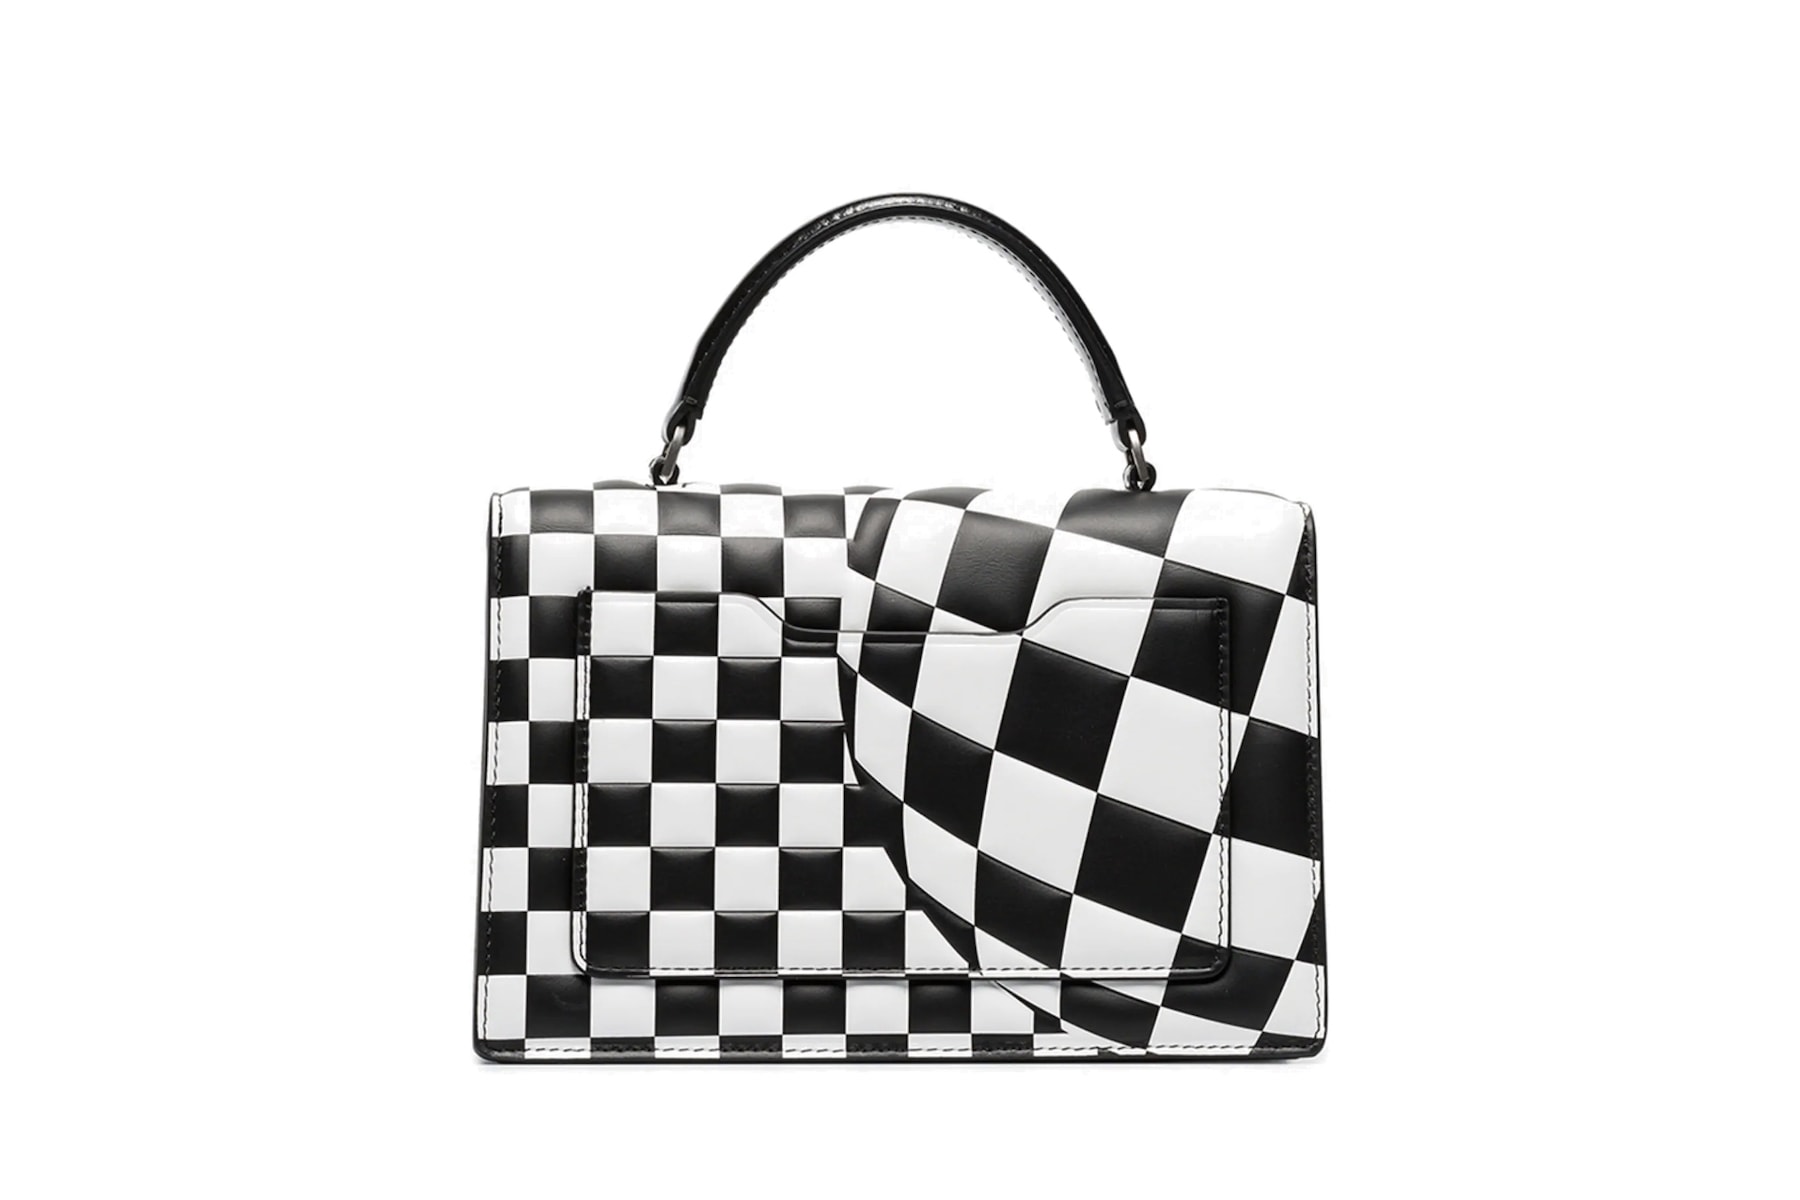 Off-White Logo Checkered Bag Black/White Purse Square Statement Luxury Virgil Abloh Design 